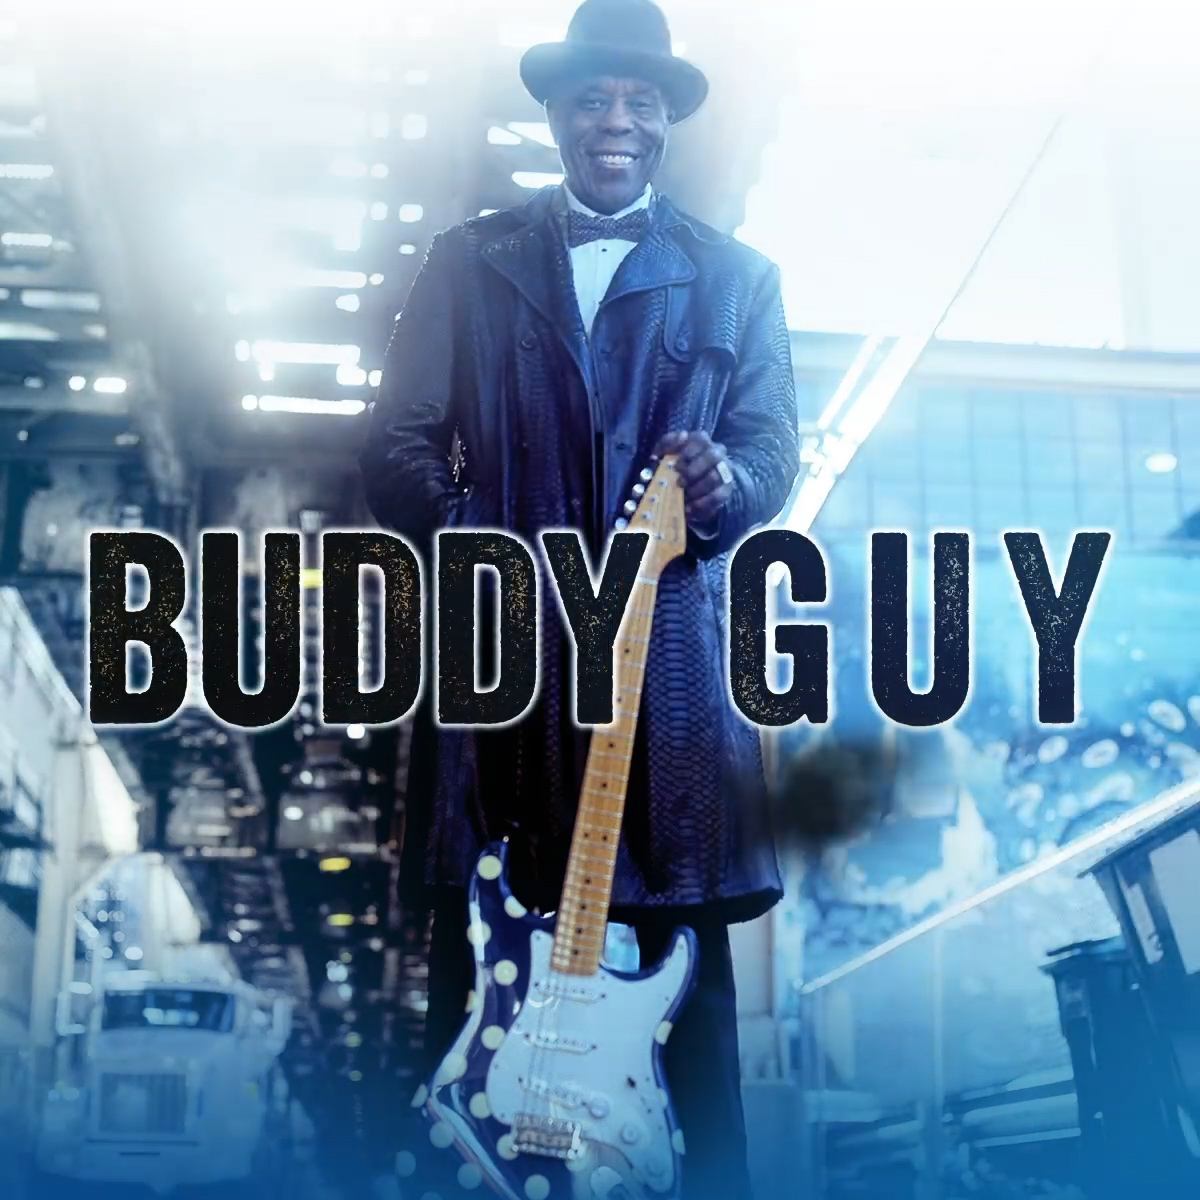 Happy 84th birthday to blues legend Buddy Guy!  